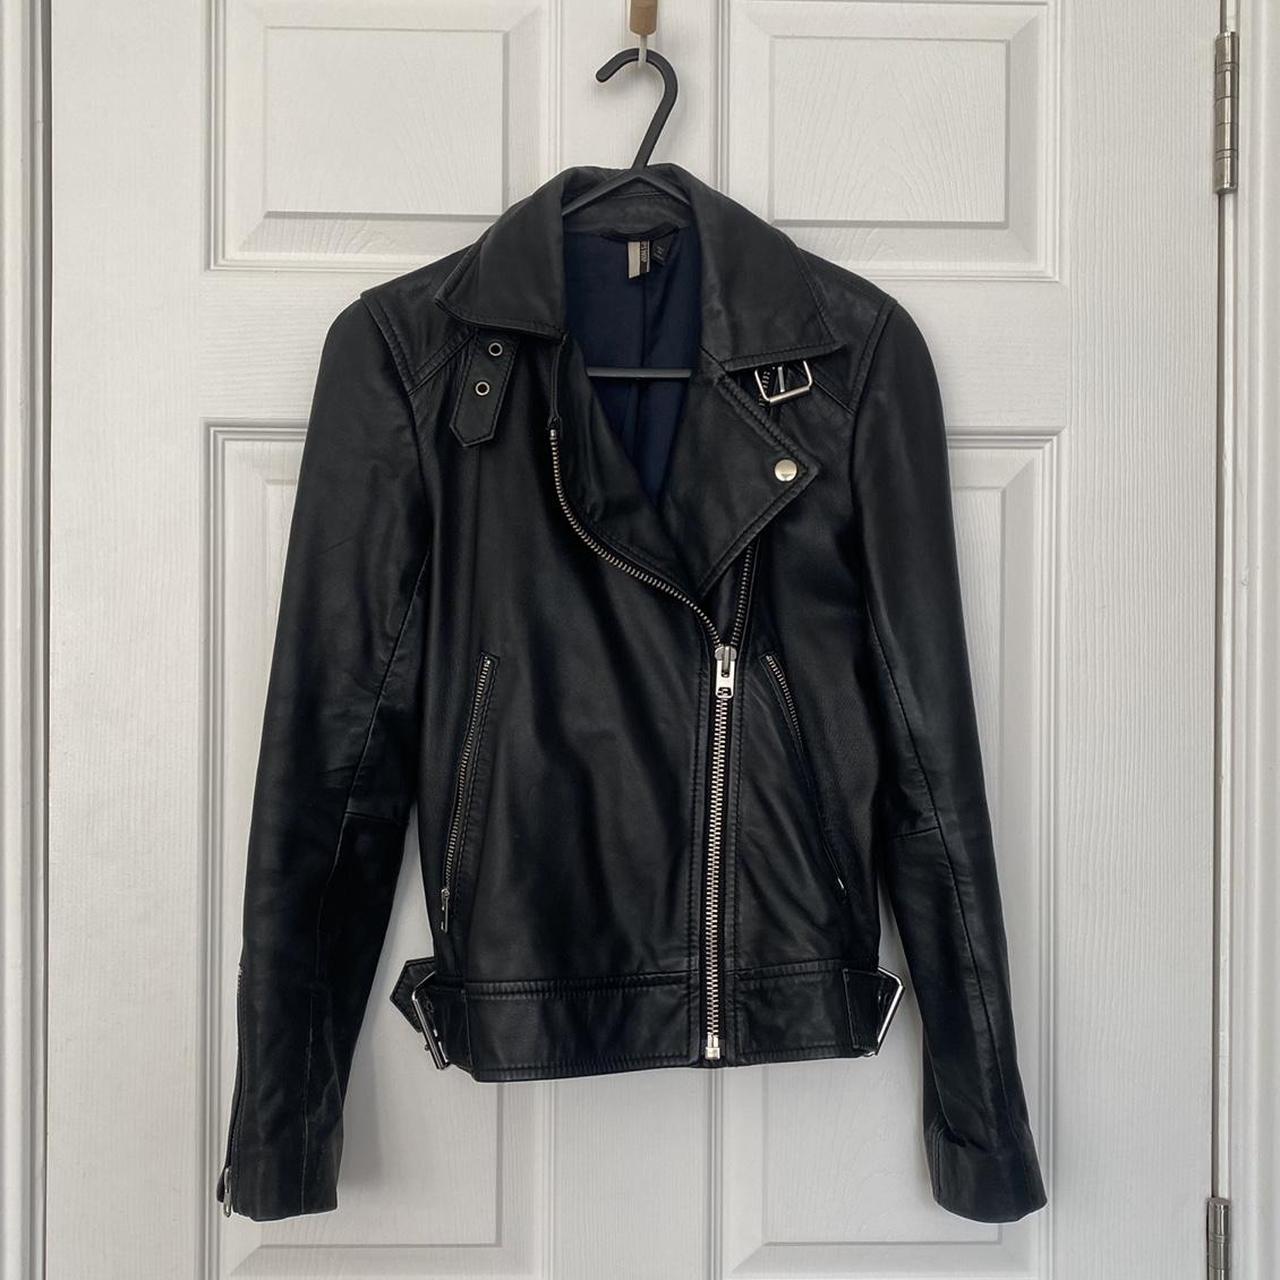 TOPSHOP real leather biker jacket with navy satin... - Depop